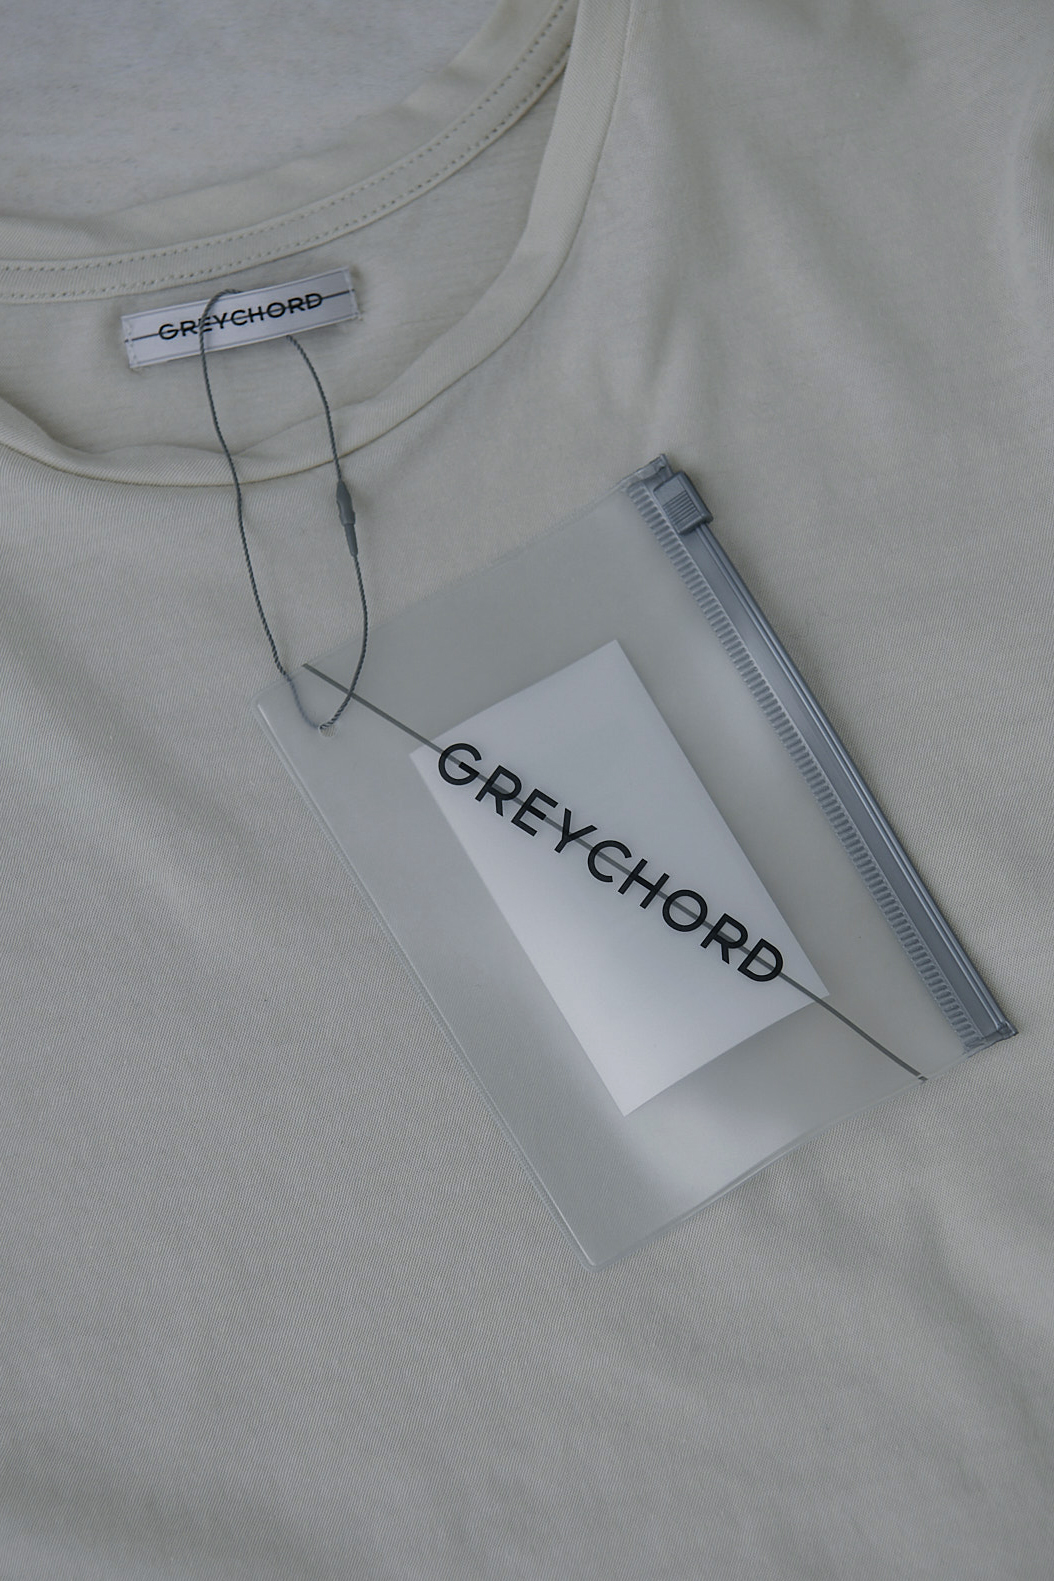 GREYCHORD(グレイコード)